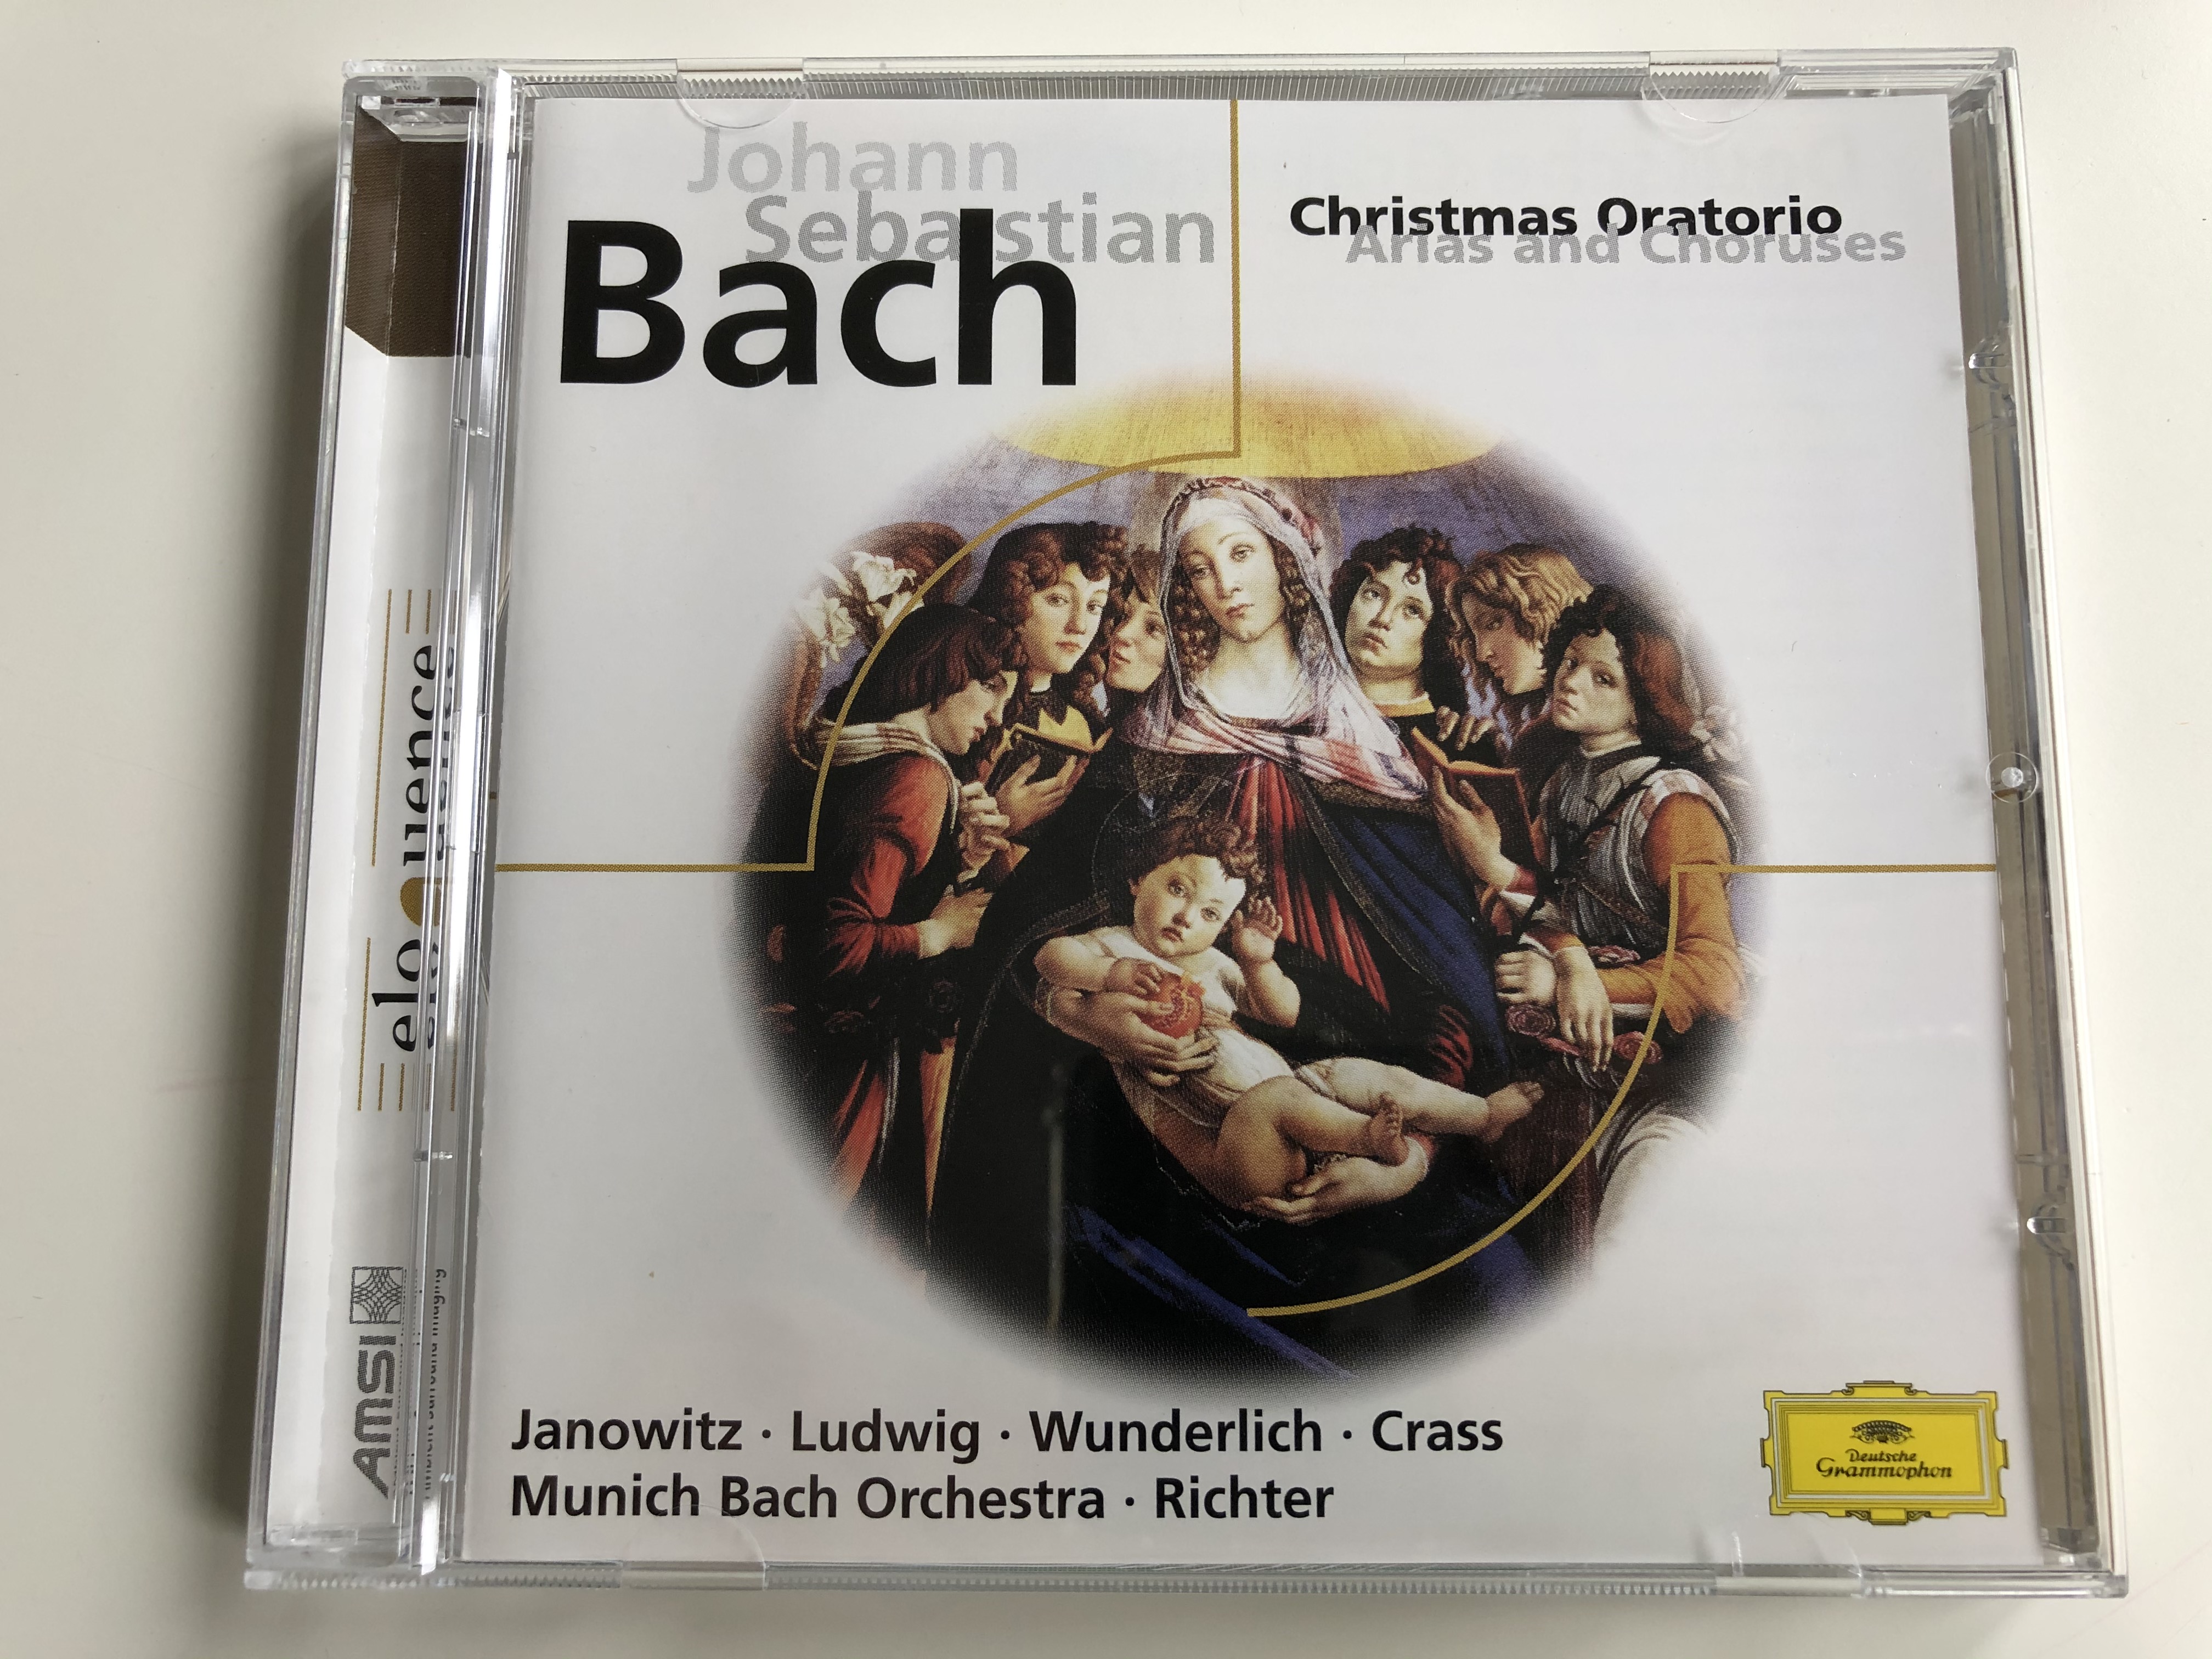 johann-sebastian-bach-christmas-oratorio-arias-choruses-janowitz-ludwig-wunderlich-crass-munich-bach-choir-munich-bach-orchestra-richter-deutsche-grammophon-audio-cd-469-662-2-1-.jpg